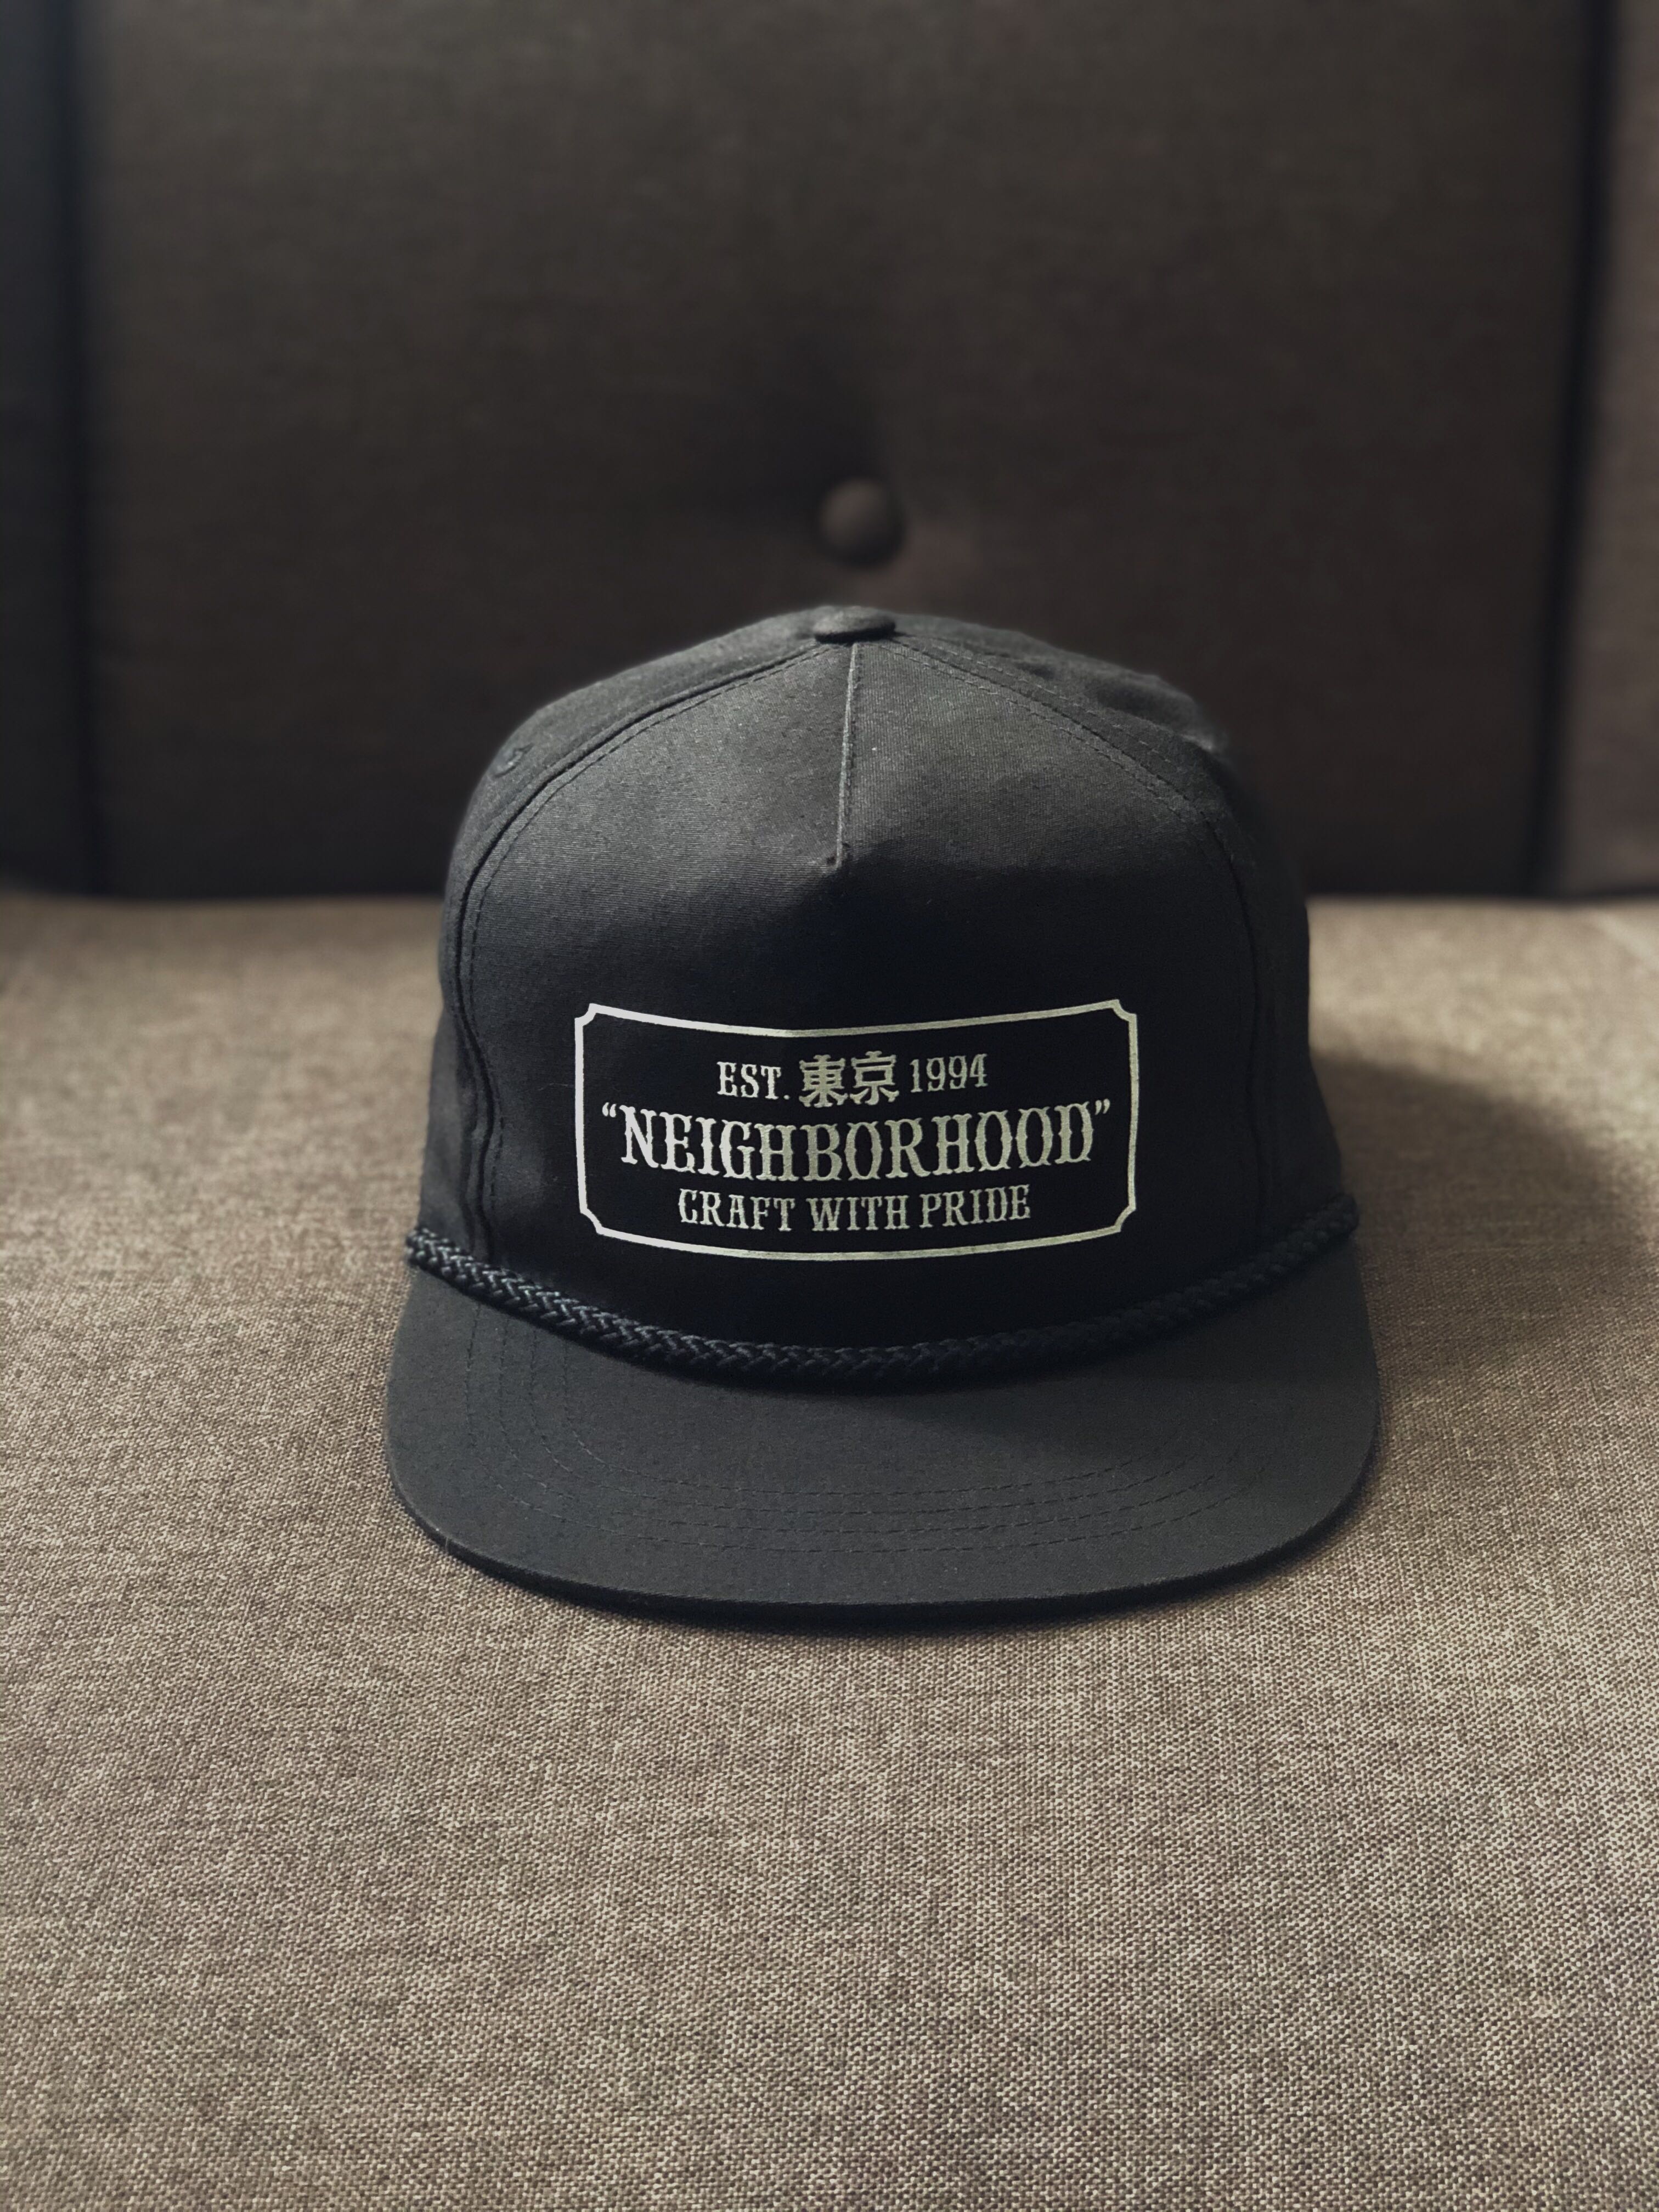 NEIGHBORHOOD NHWDS / C-CAP "Black"